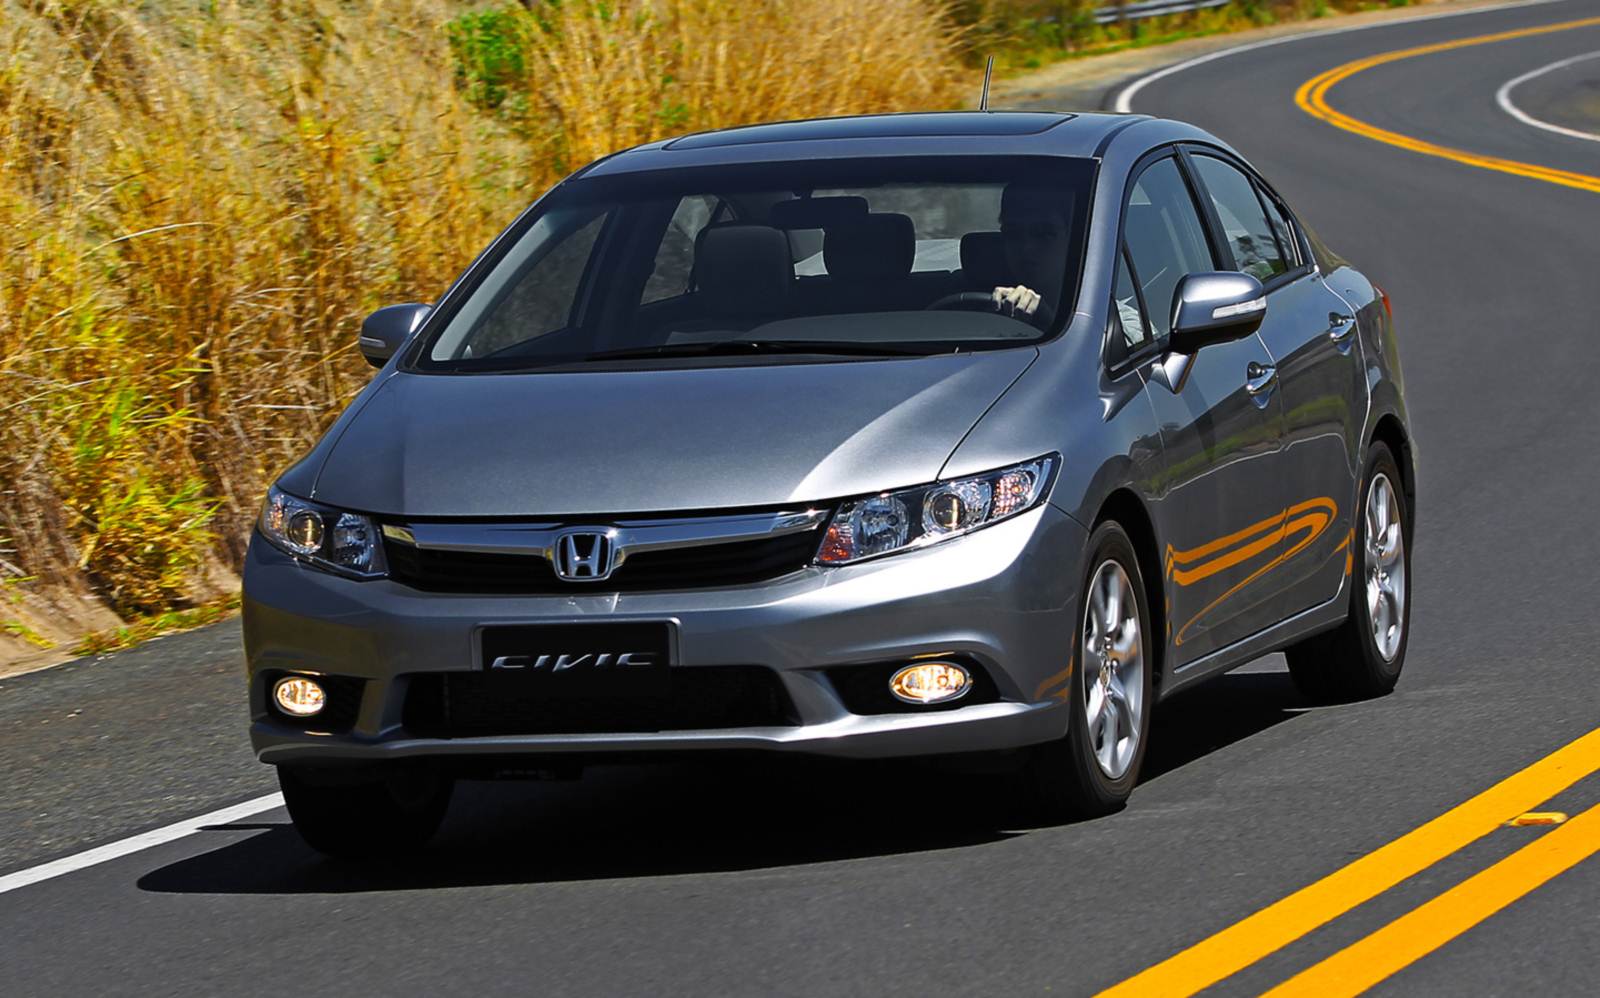 Honda Civic 2014 – Novidades do novo modelo • Carro Bonito